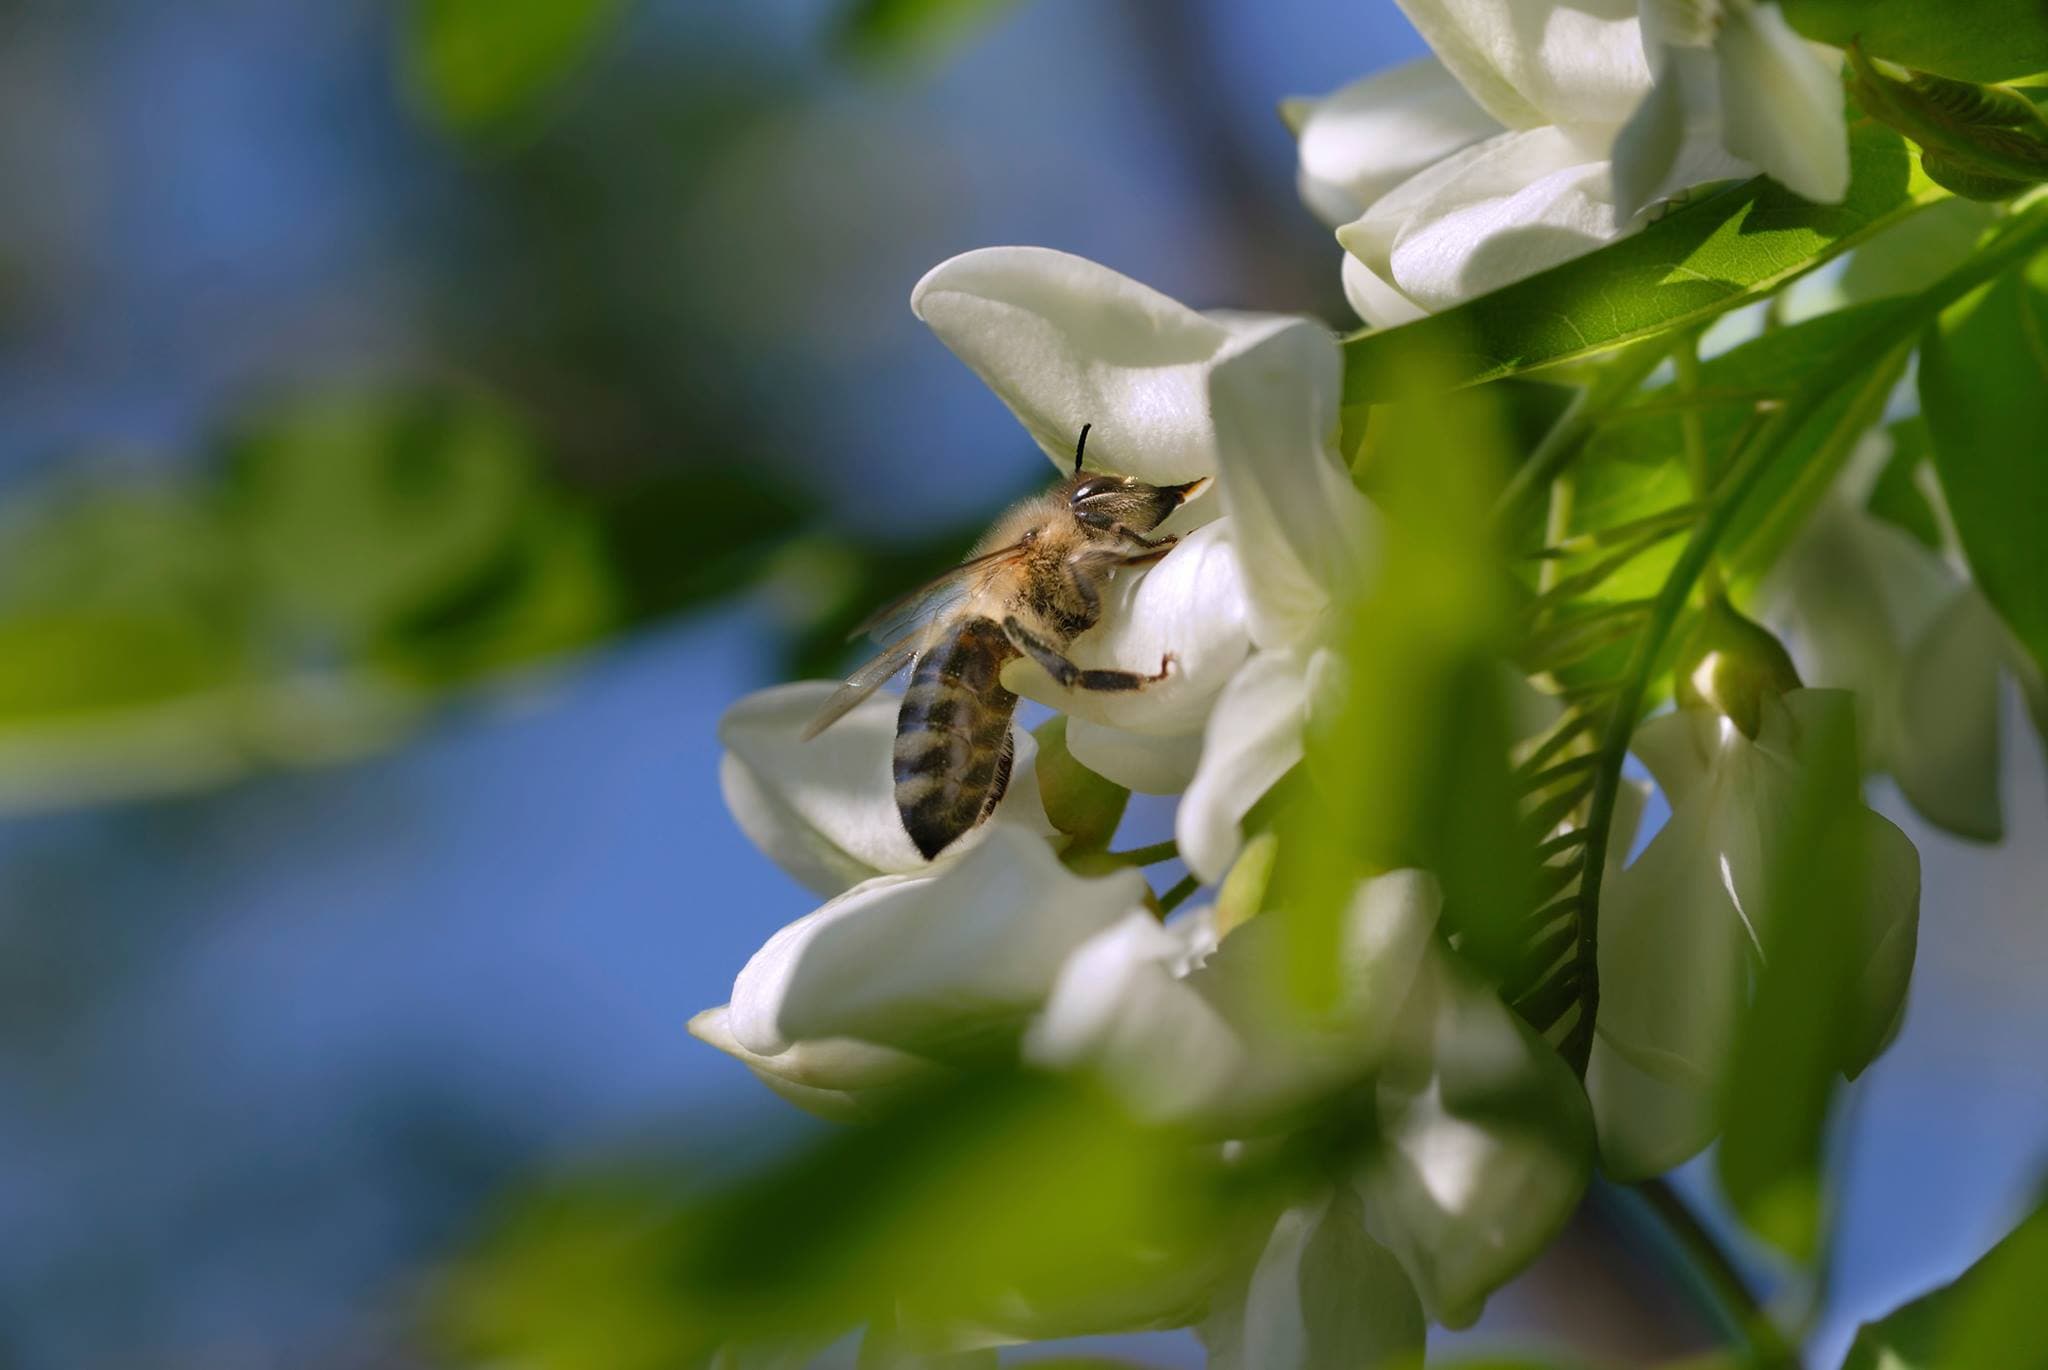 20 May - World Bee Day